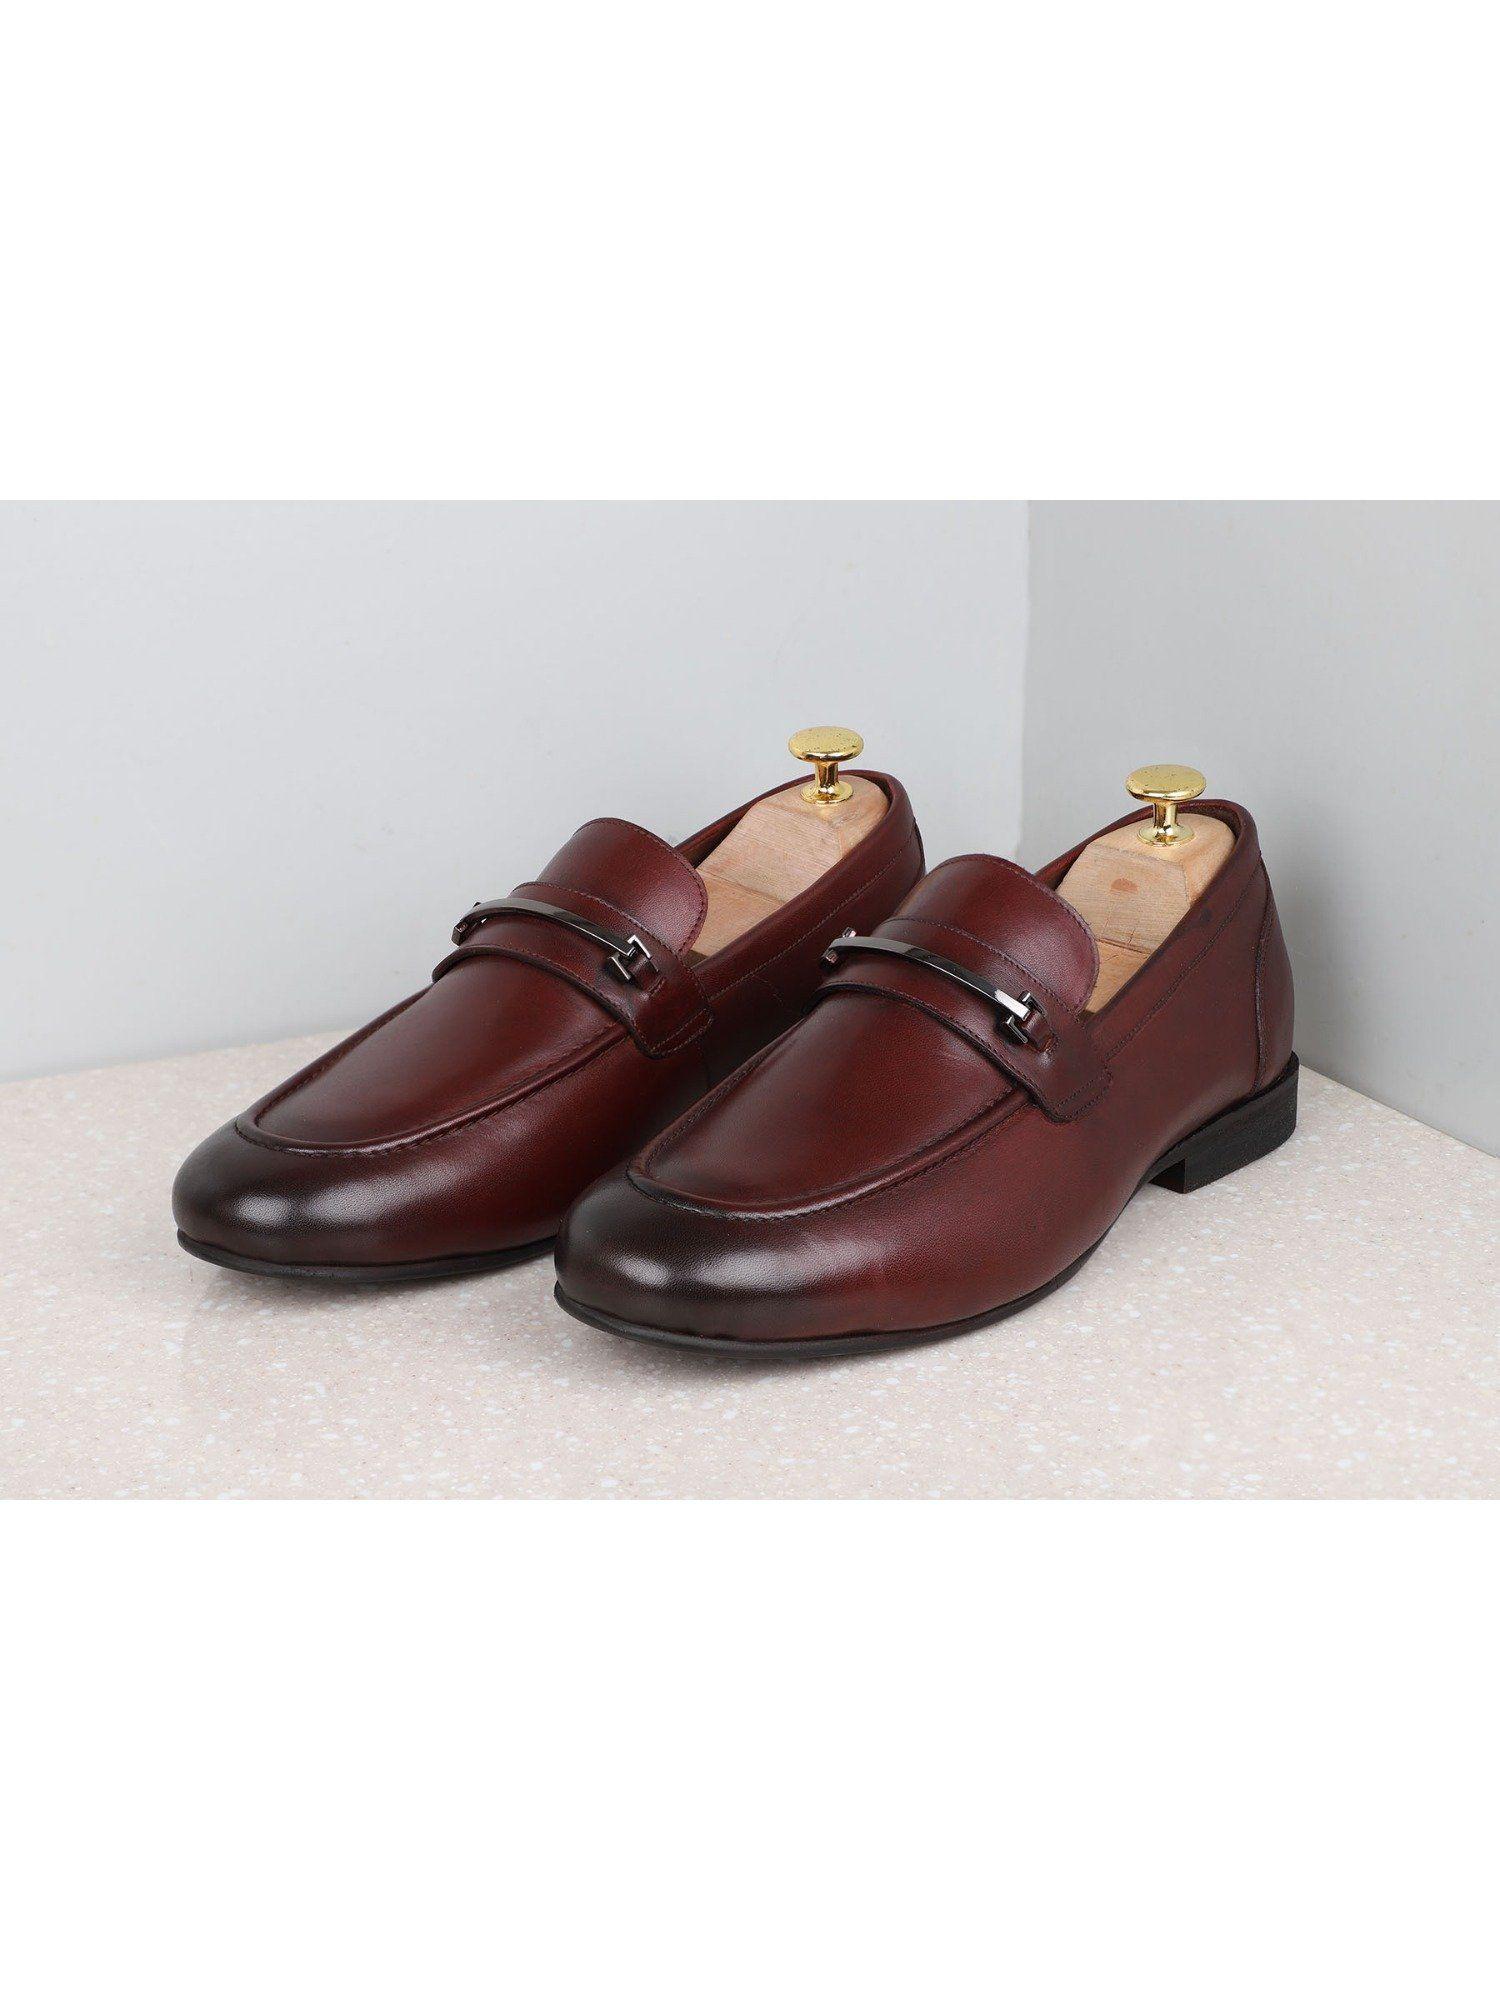 solid-plain burgundy formal shoes